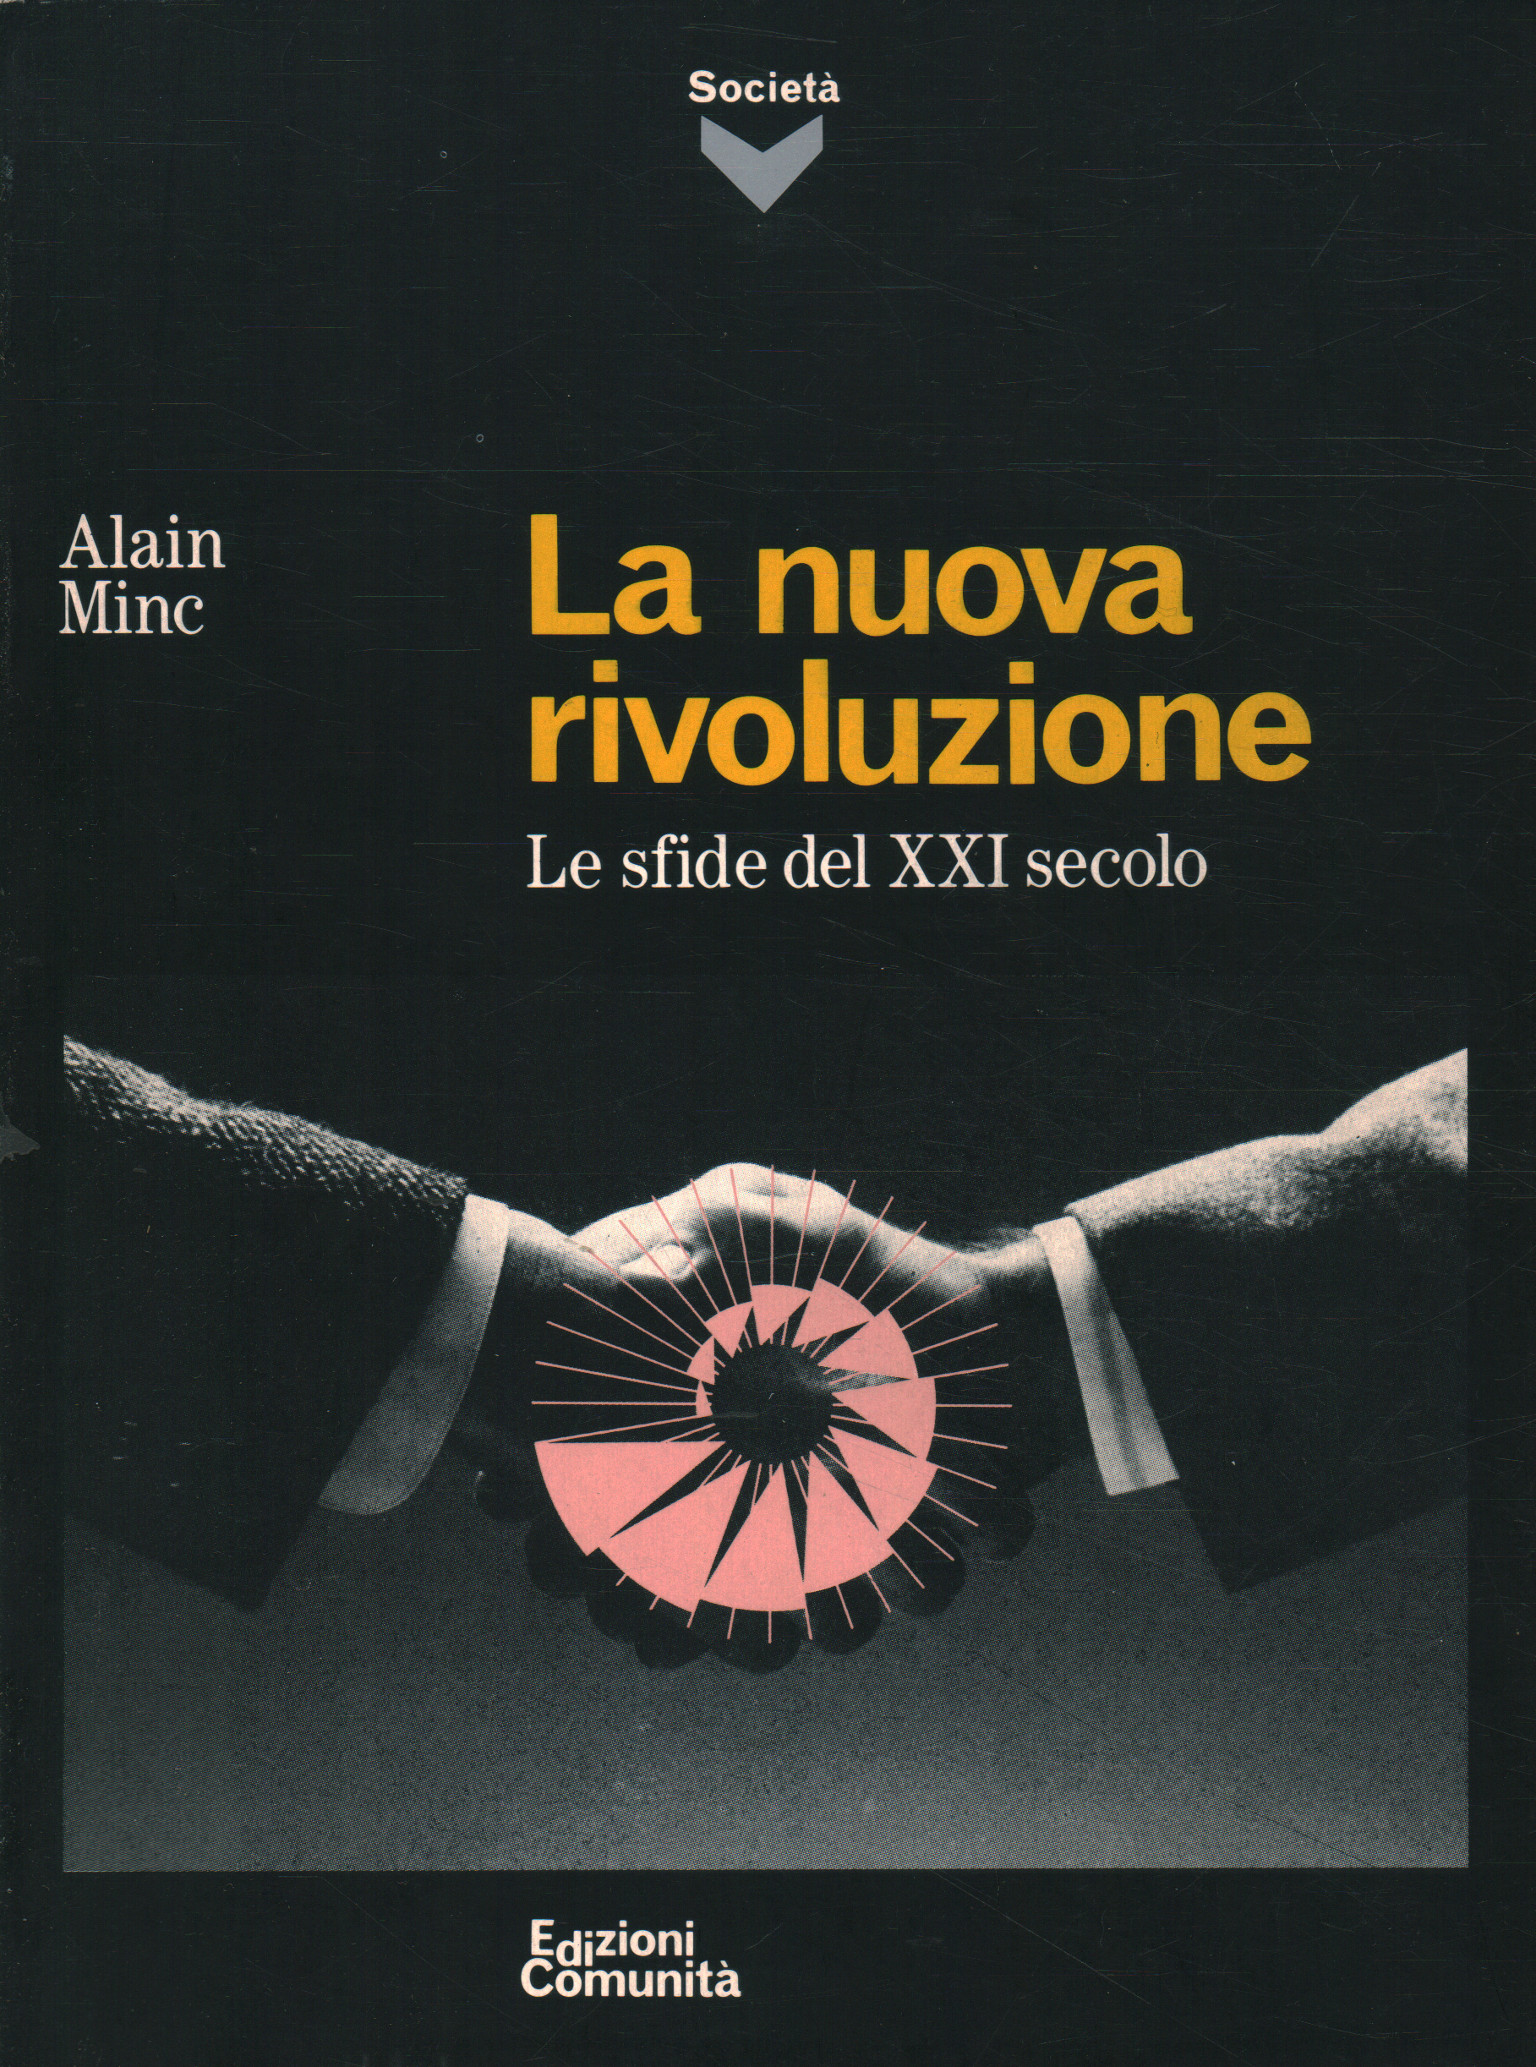 The new revolution, Alain Minc